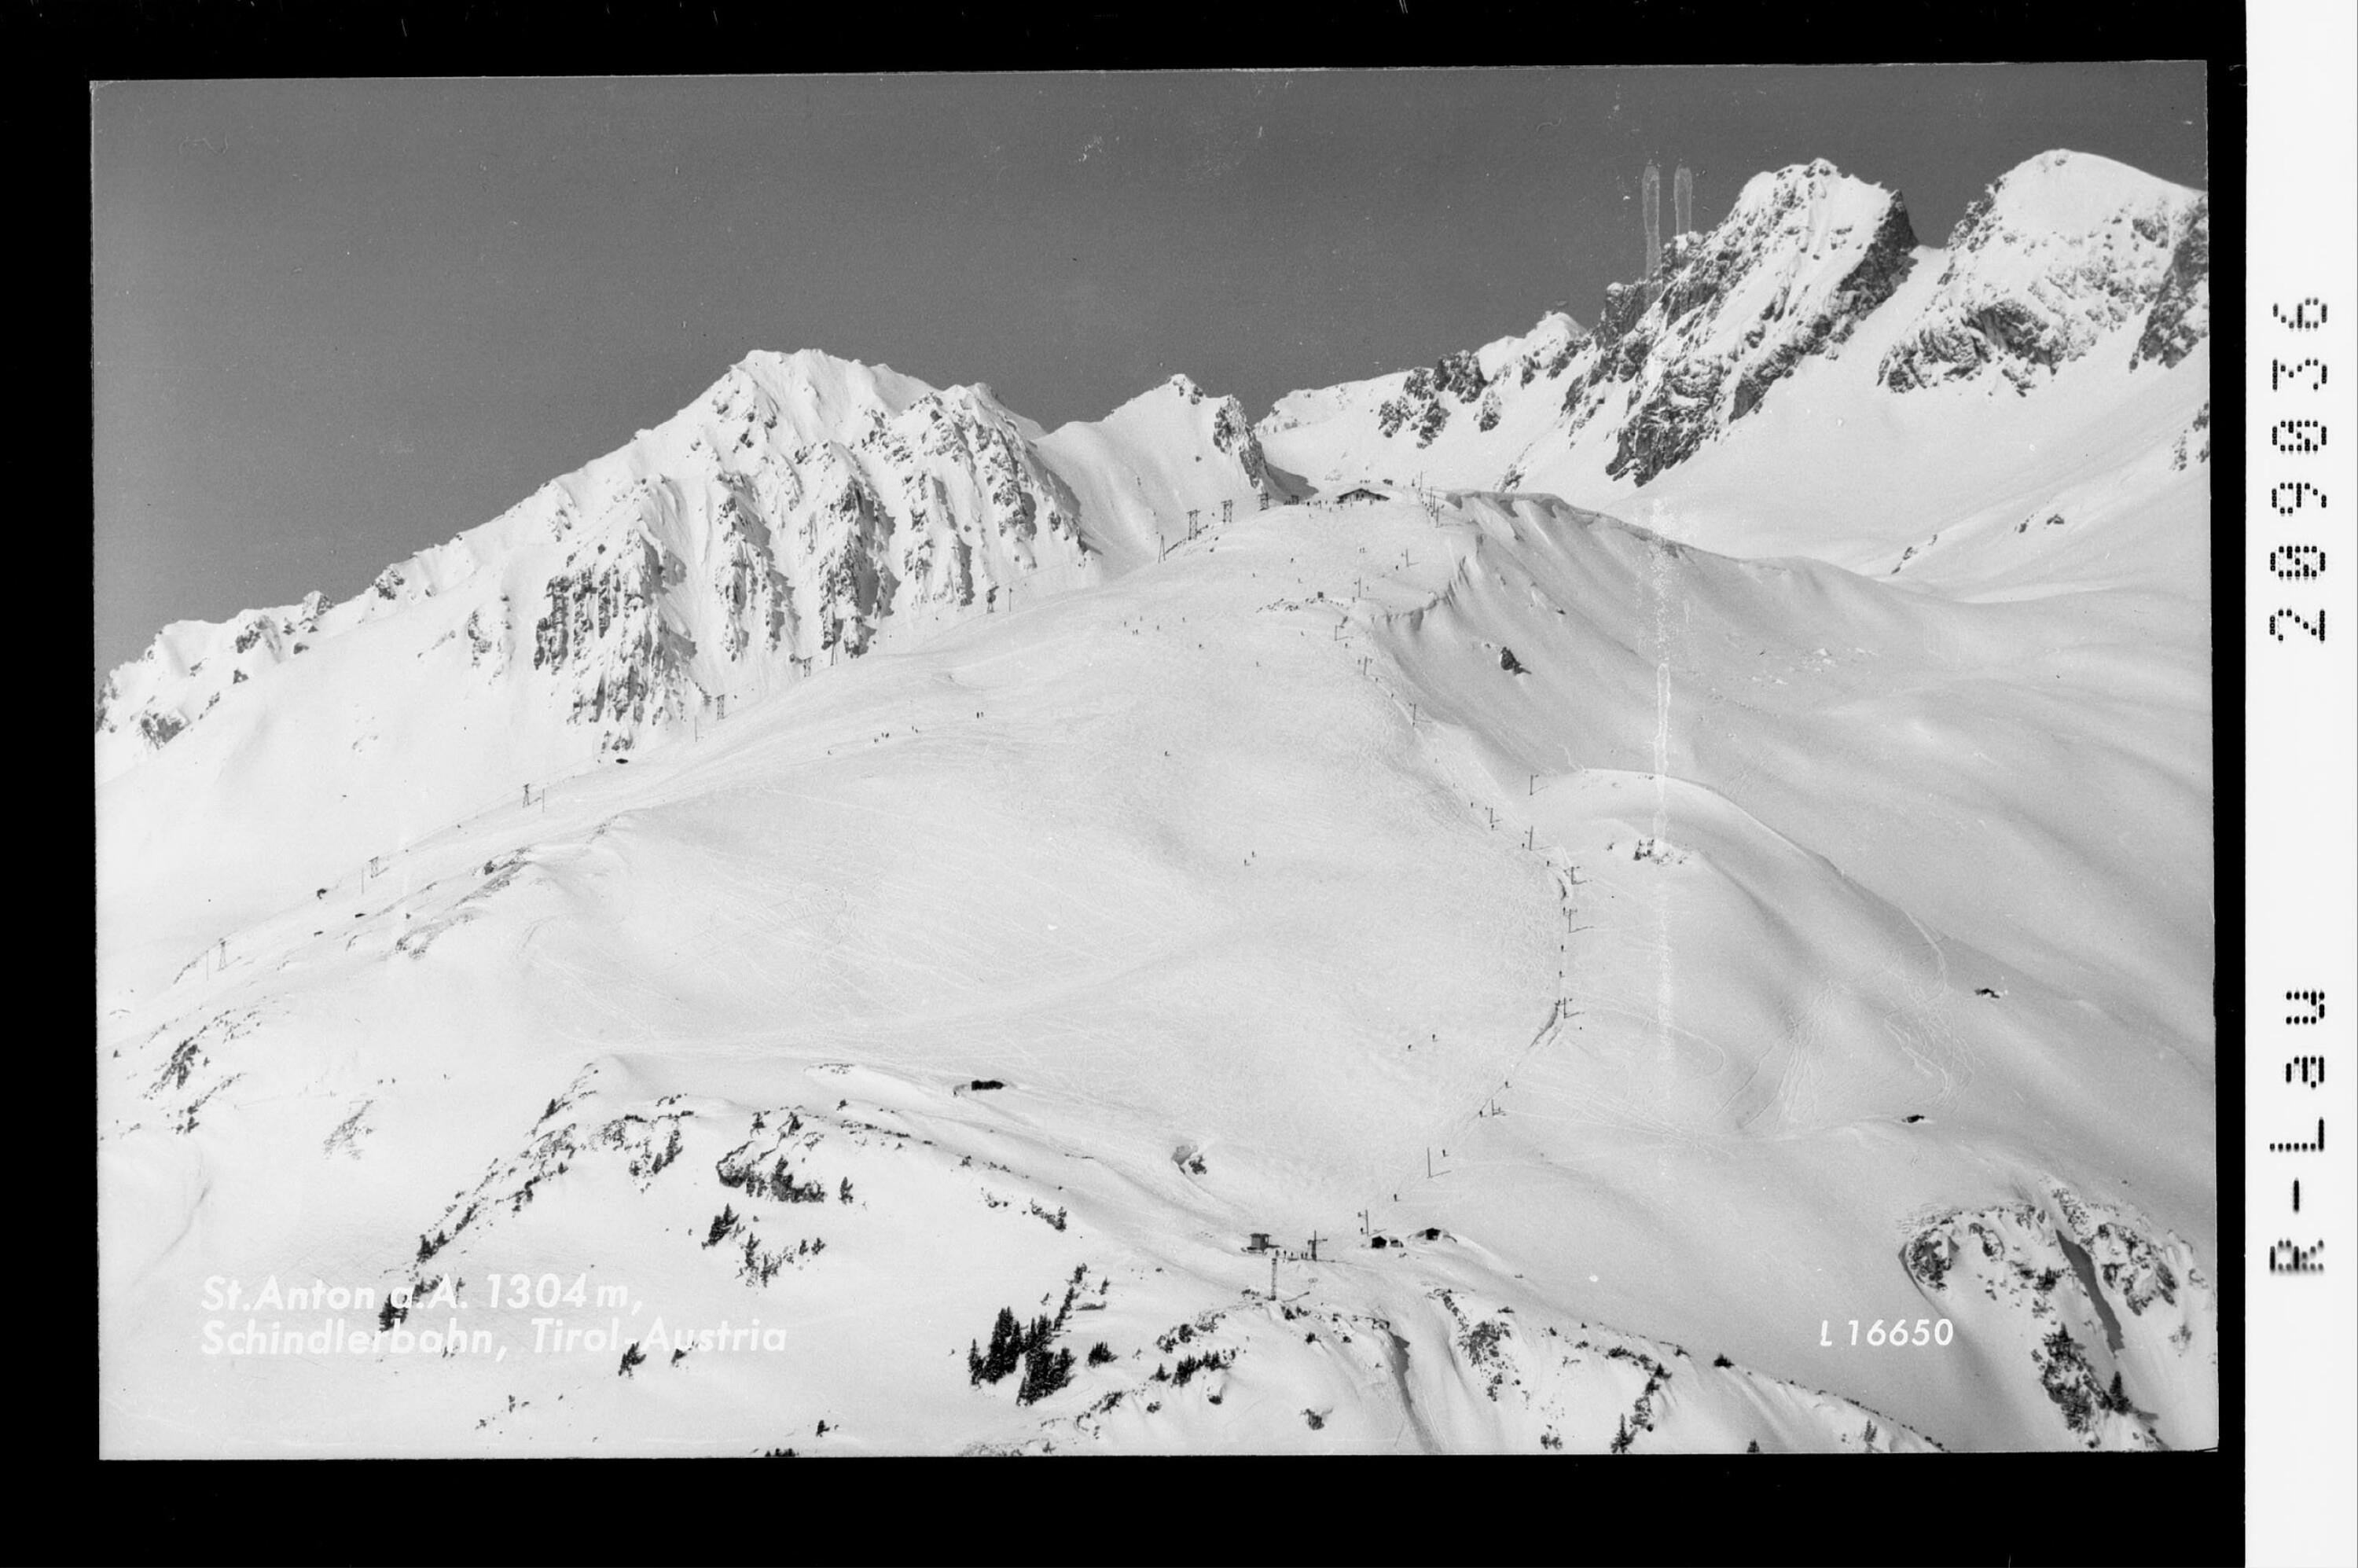 St.Anton am Arlberg 1304 m, Schindlerbahn, Tirol - Austria></div>


    <hr>
    <div class=